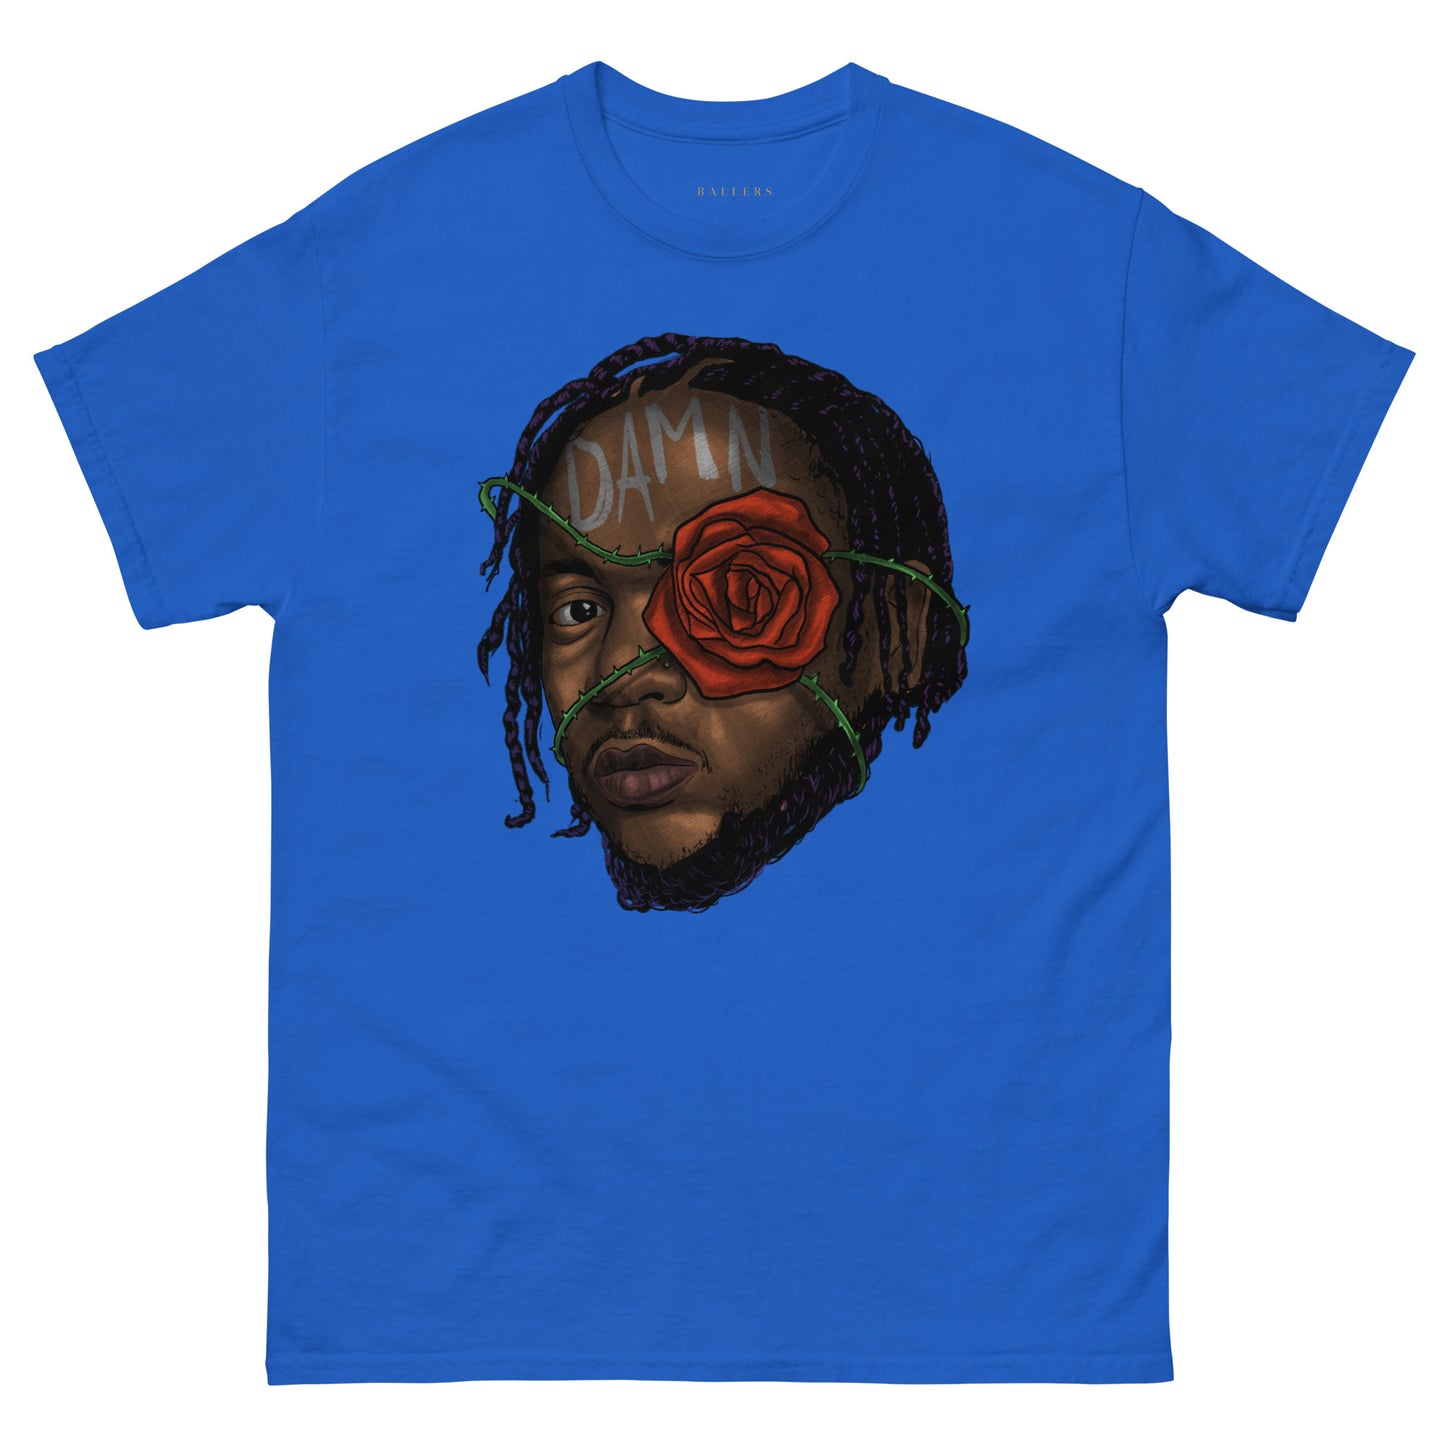 Kendrick Lamar "DAMN" T-Shirt